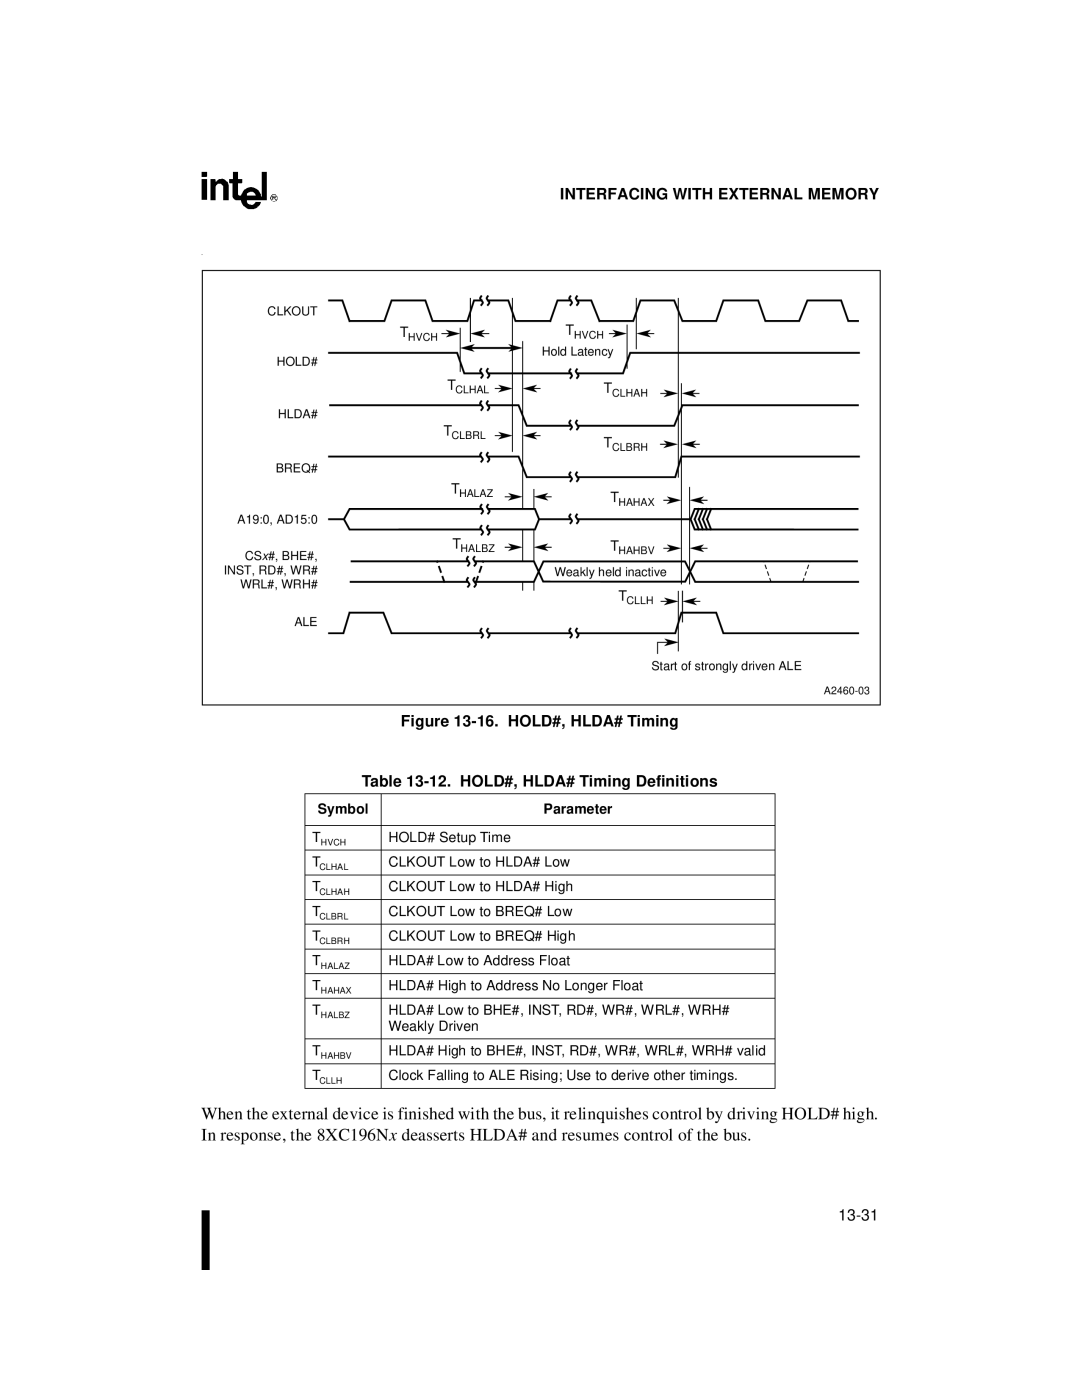 Intel 80C196NU, 8XC196NP, Microcontroller manual HOLD#, HLDA# Timing Definitions, Symbol Parameter 